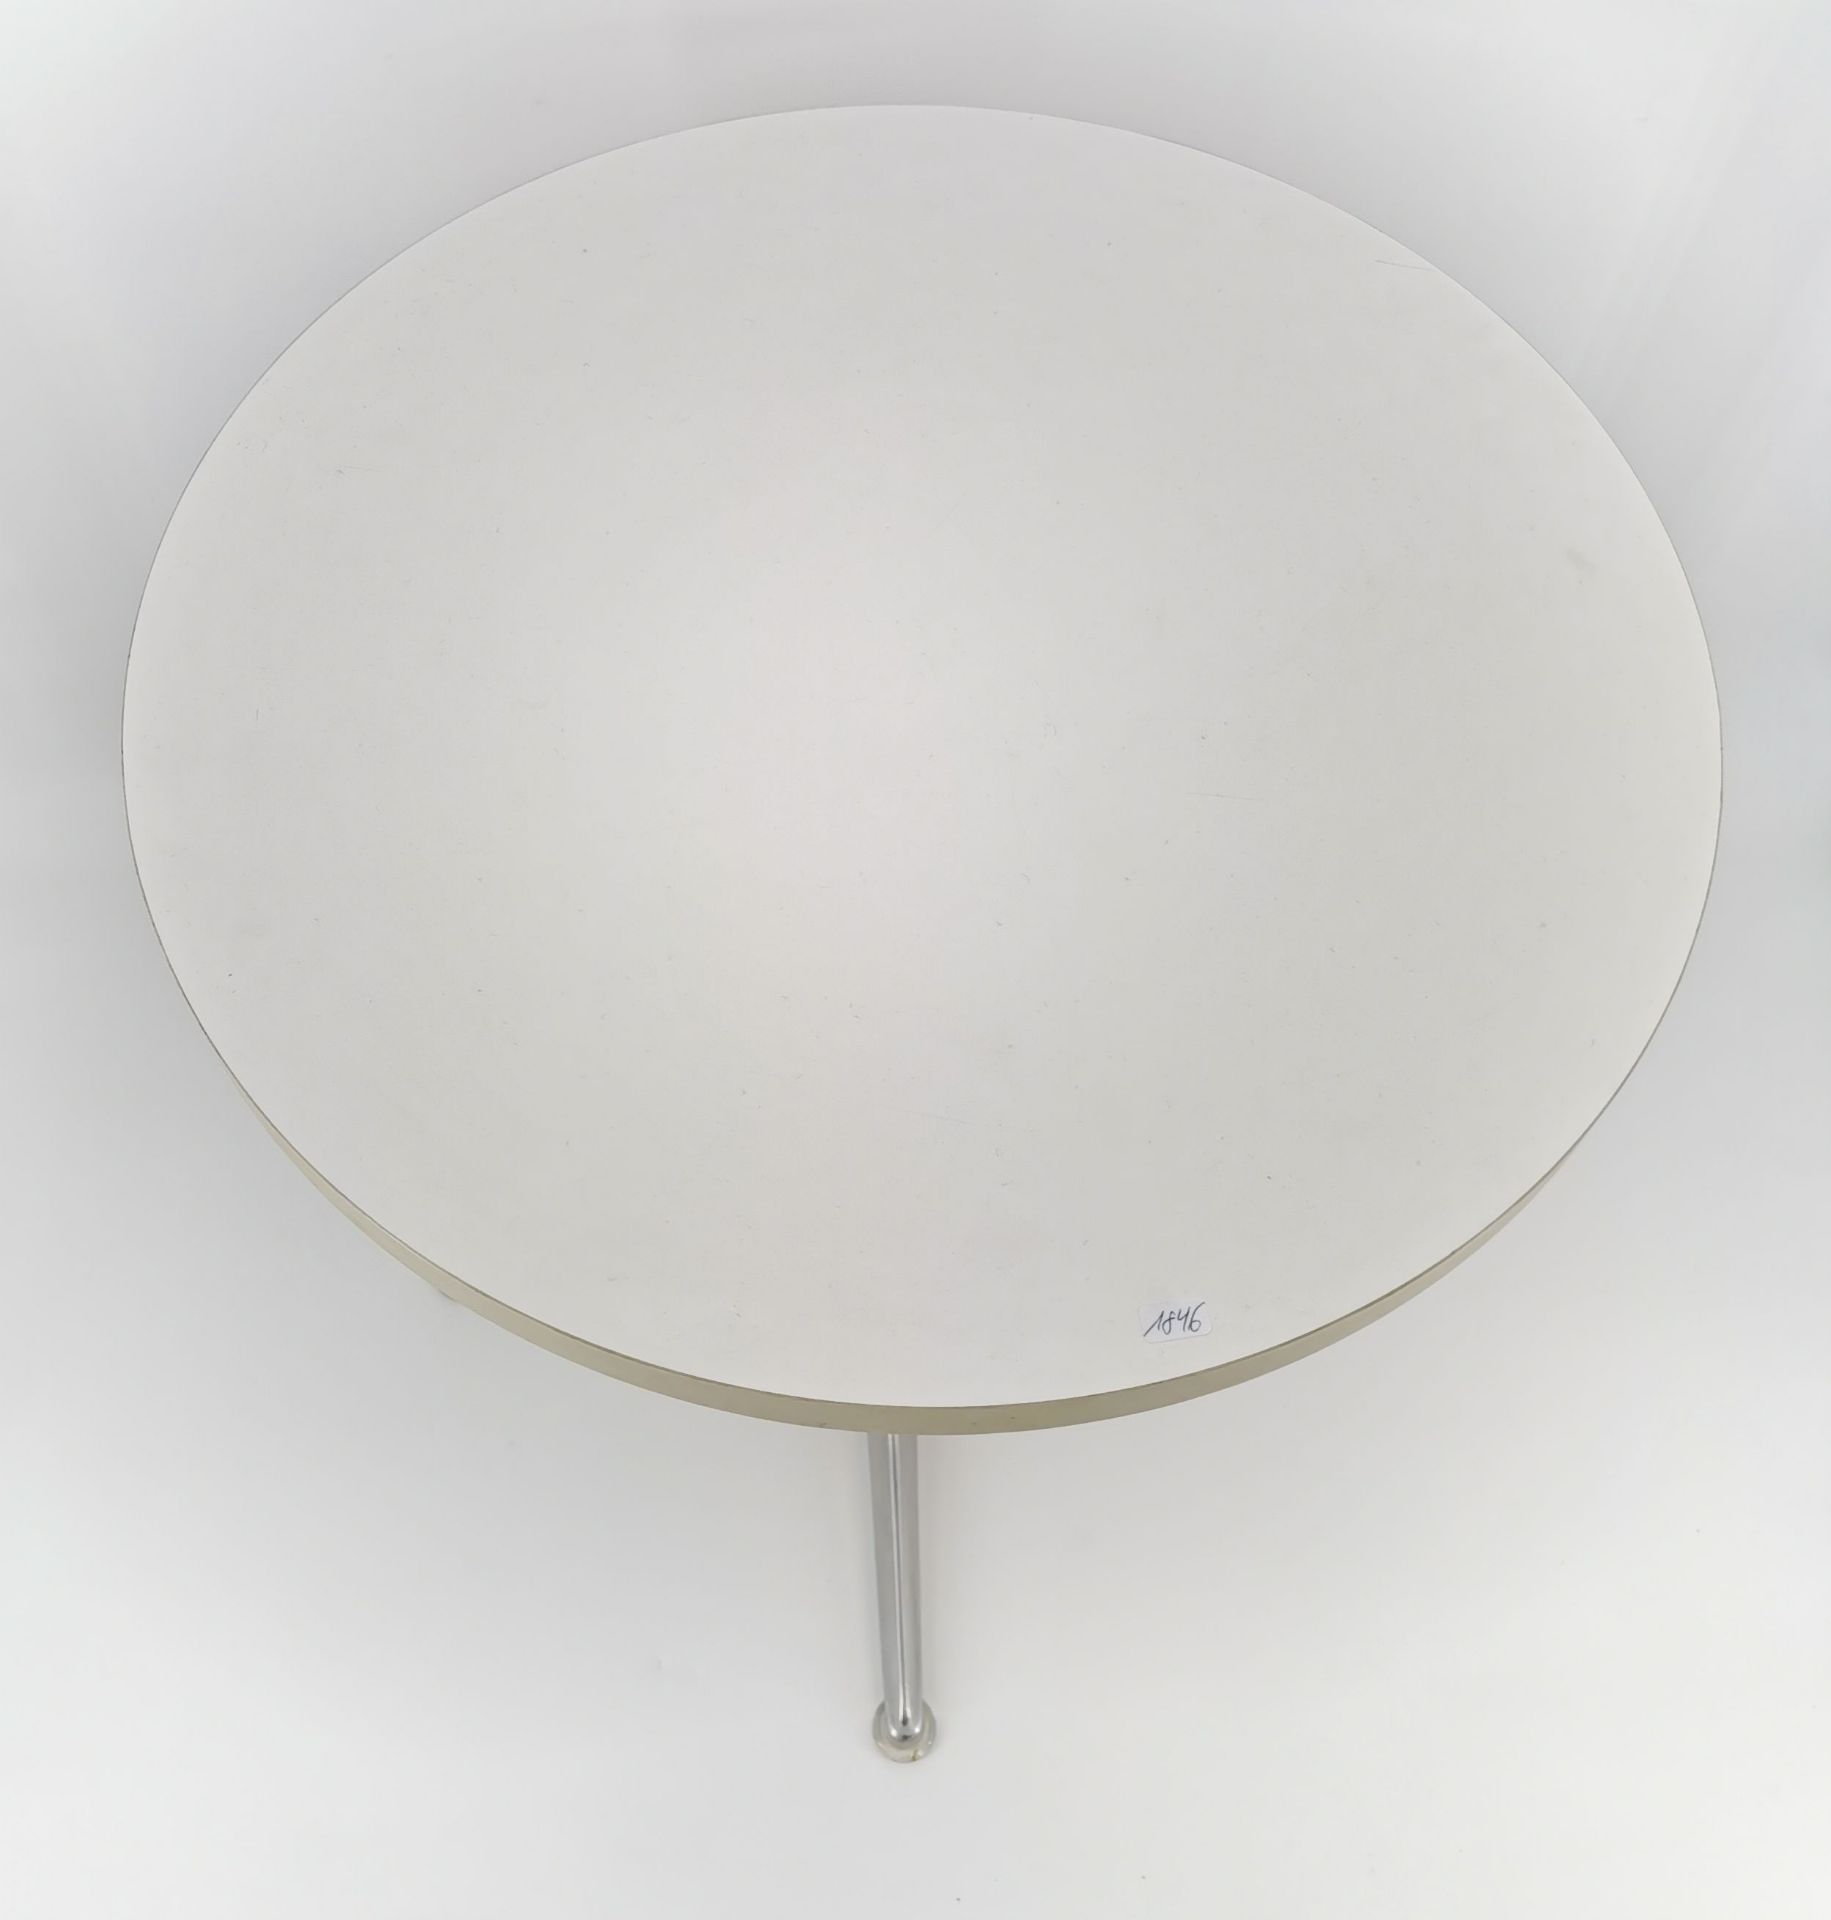 SIDE TABLE "SEDIA" - Image 2 of 2